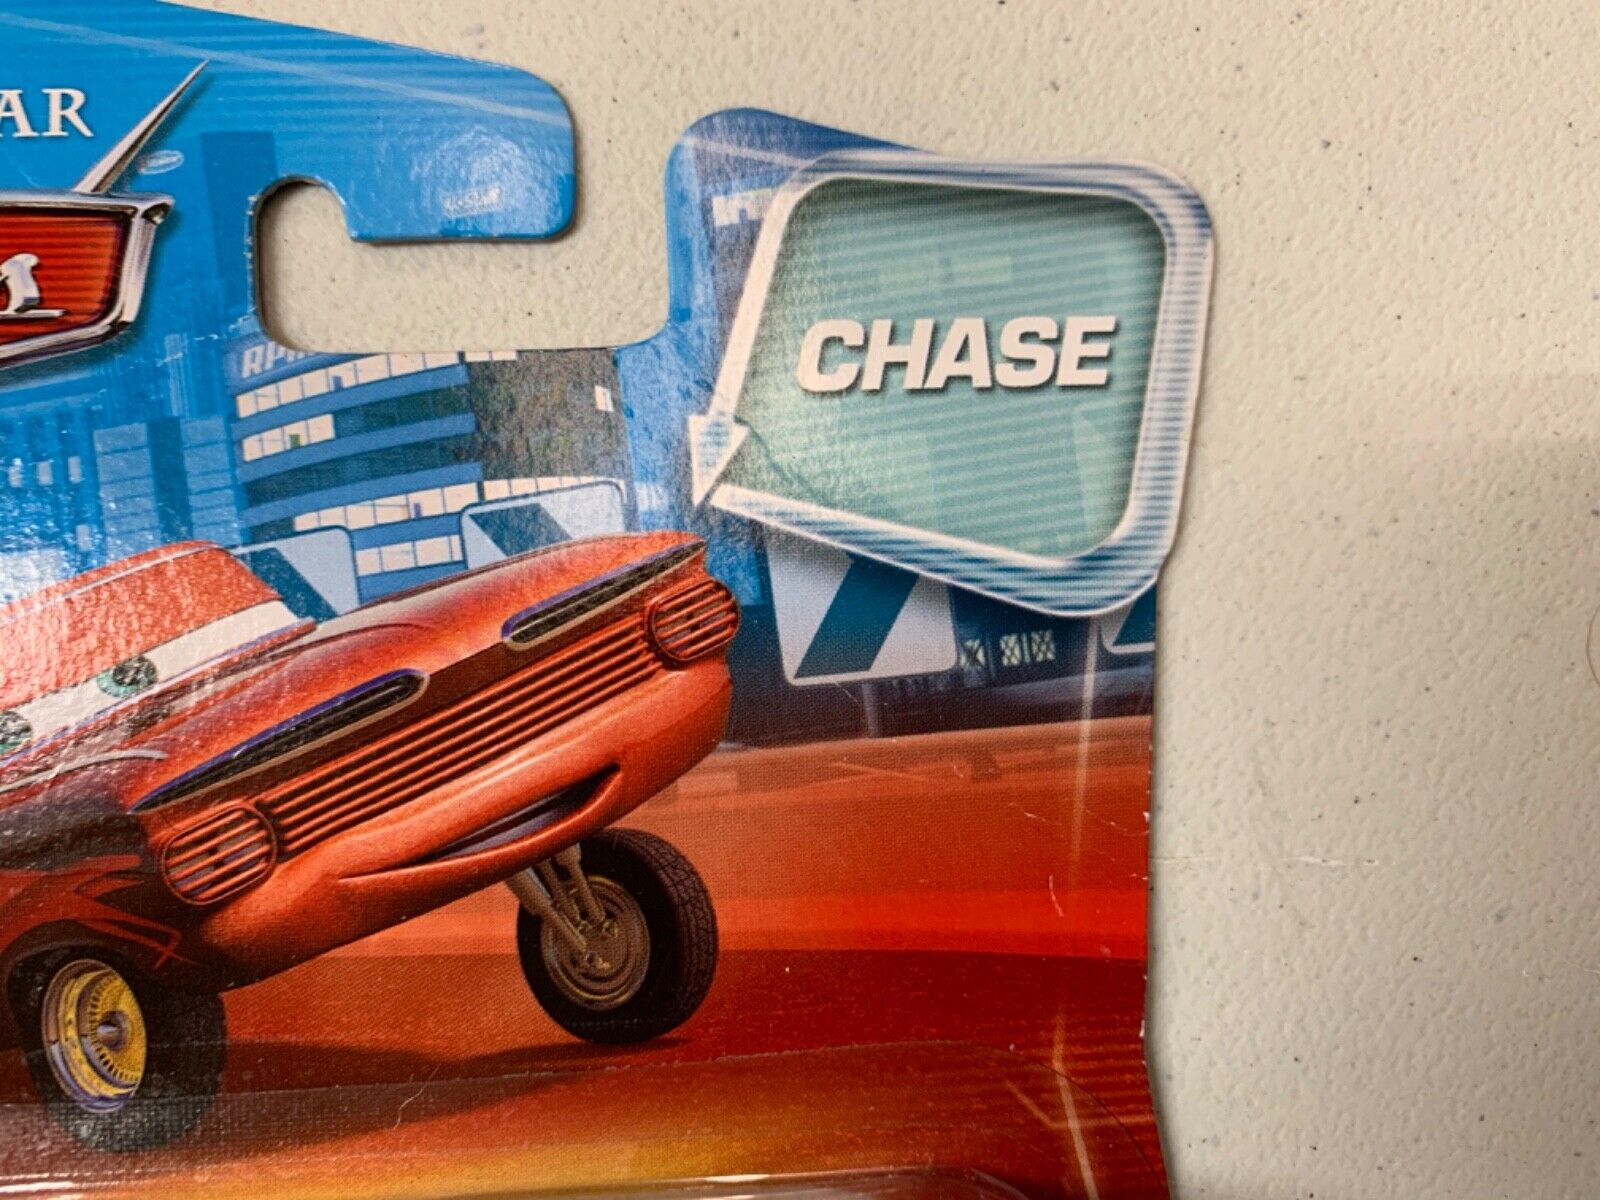 Disney Pixar Cars Hydraulic Ramone with Metallic Finish Chase